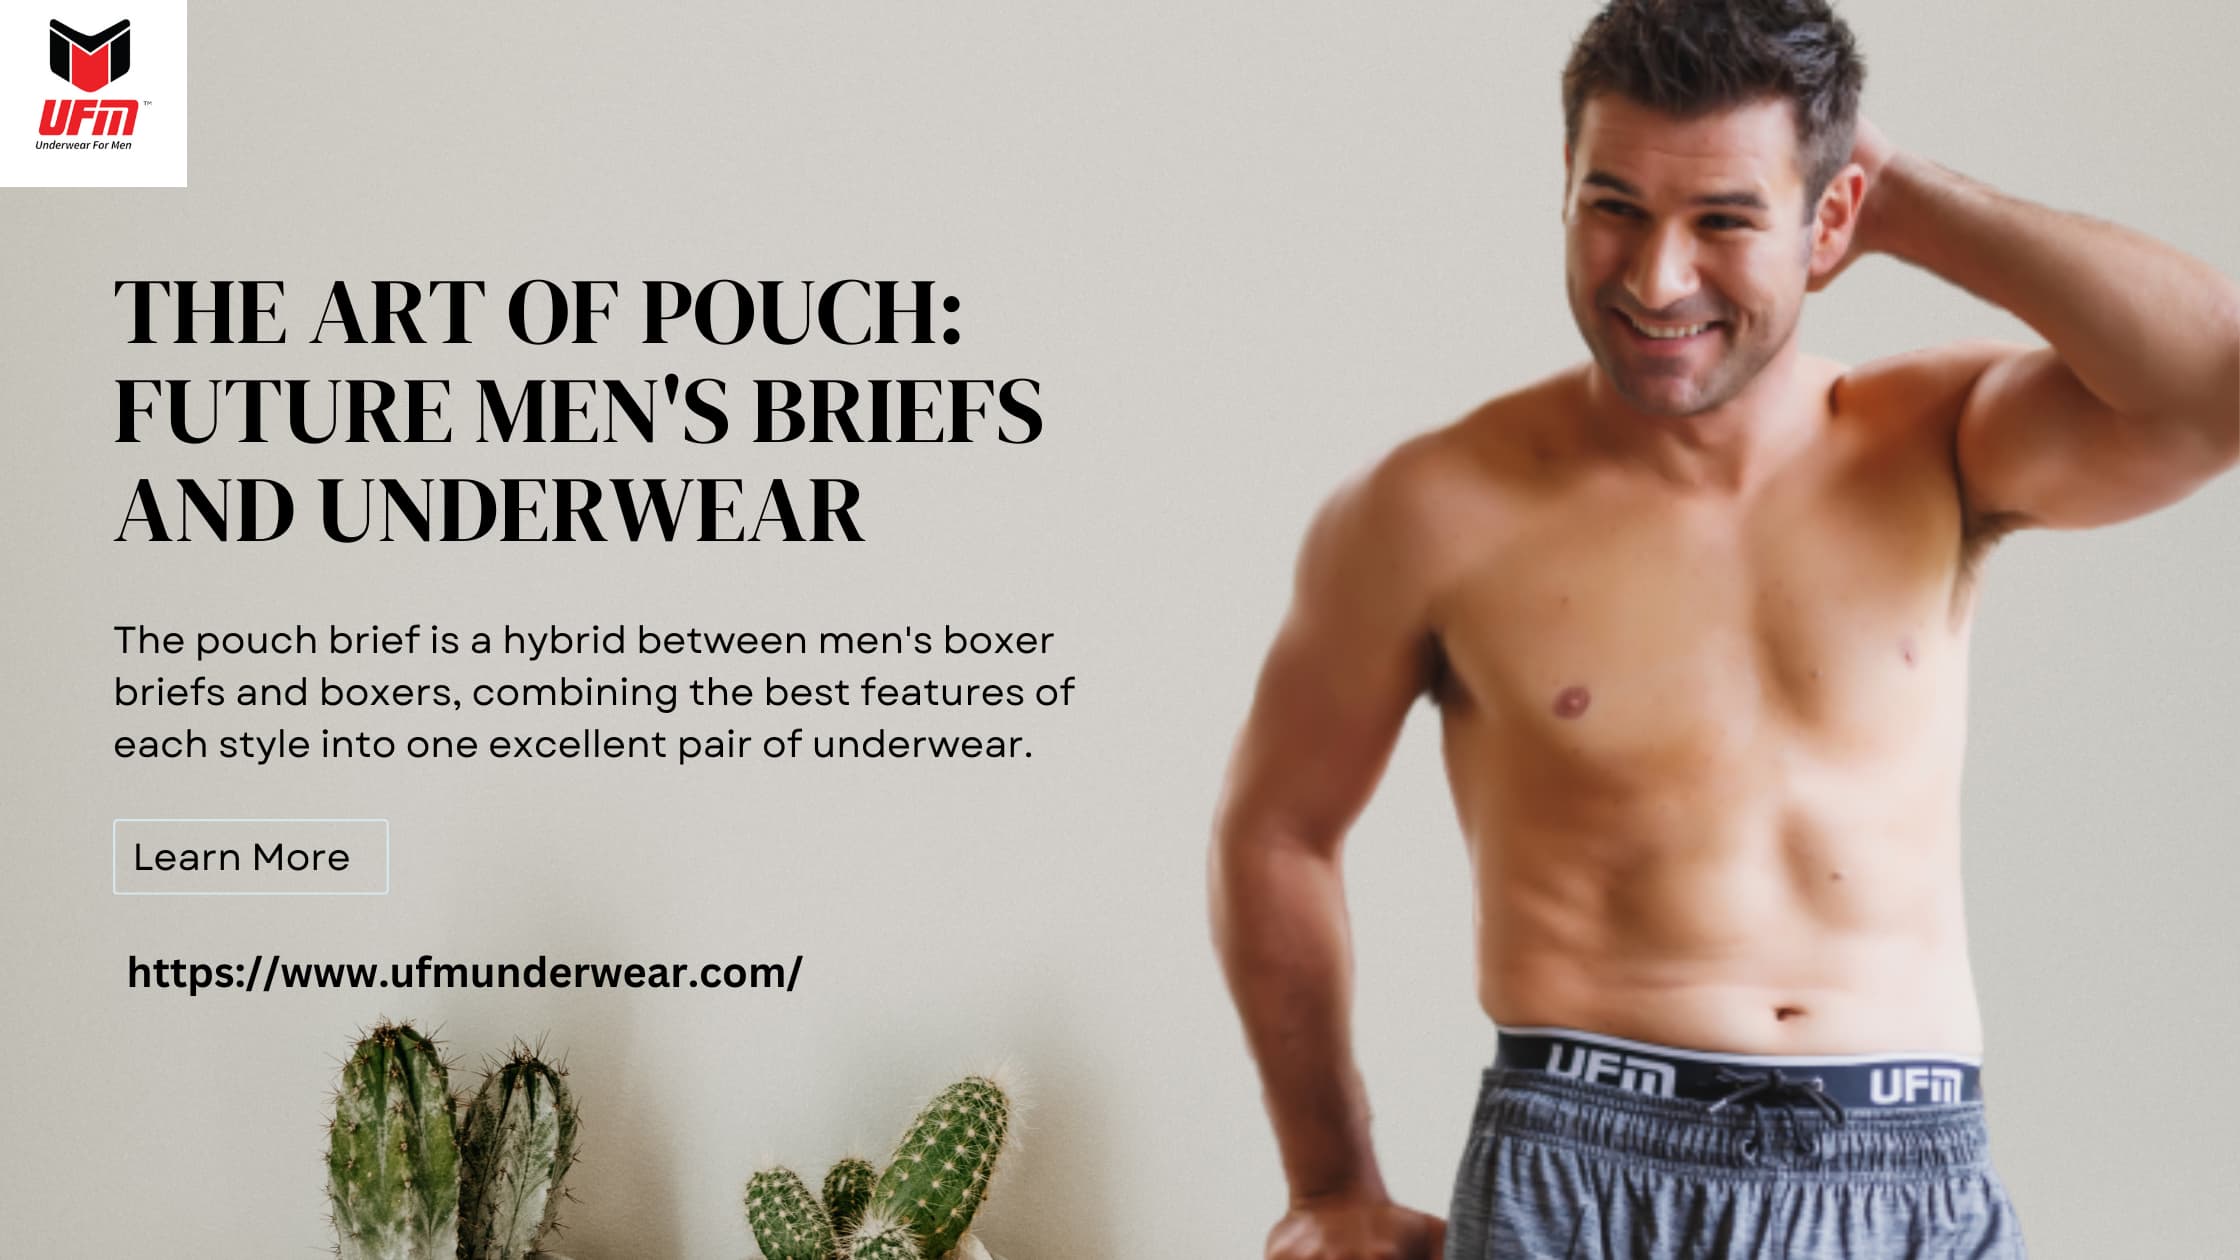 The Future Men's Pouch Briefs and Underwear